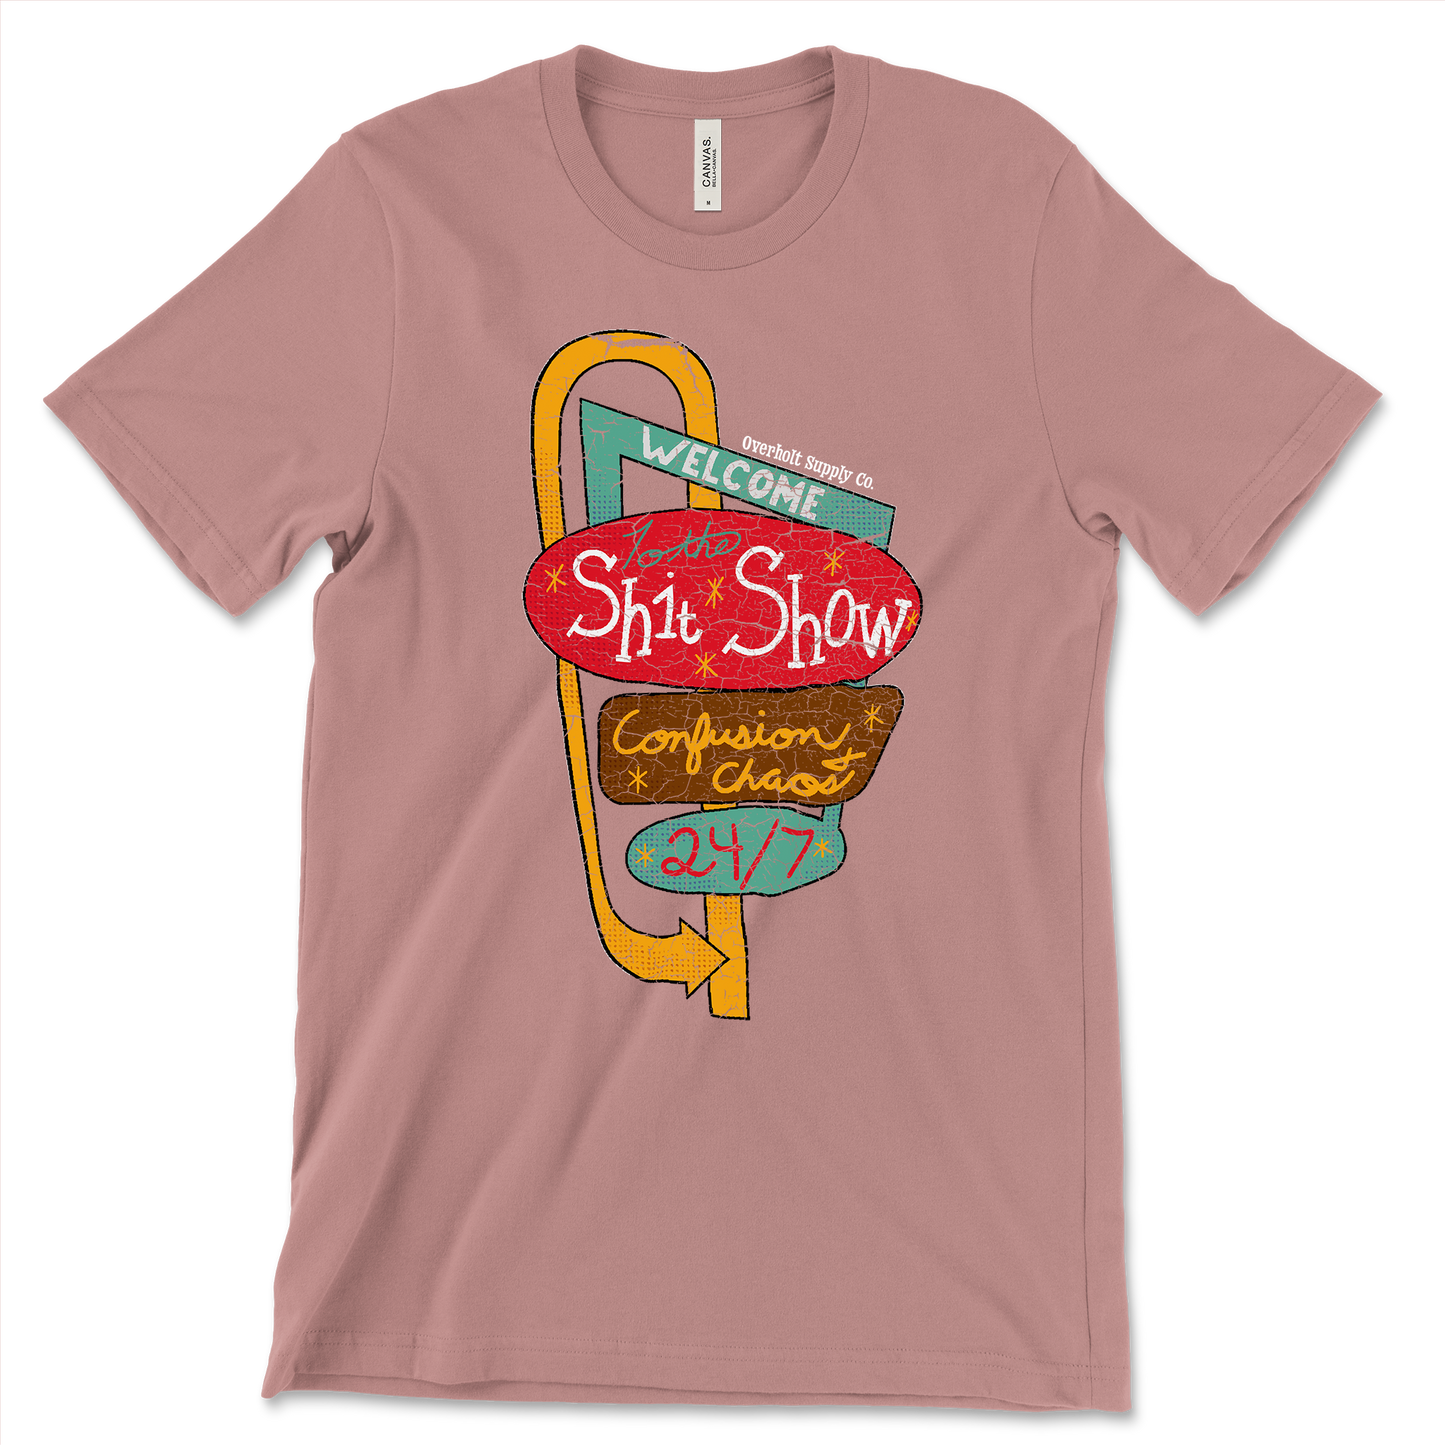 OSC-031 Shit Show T-Shirt